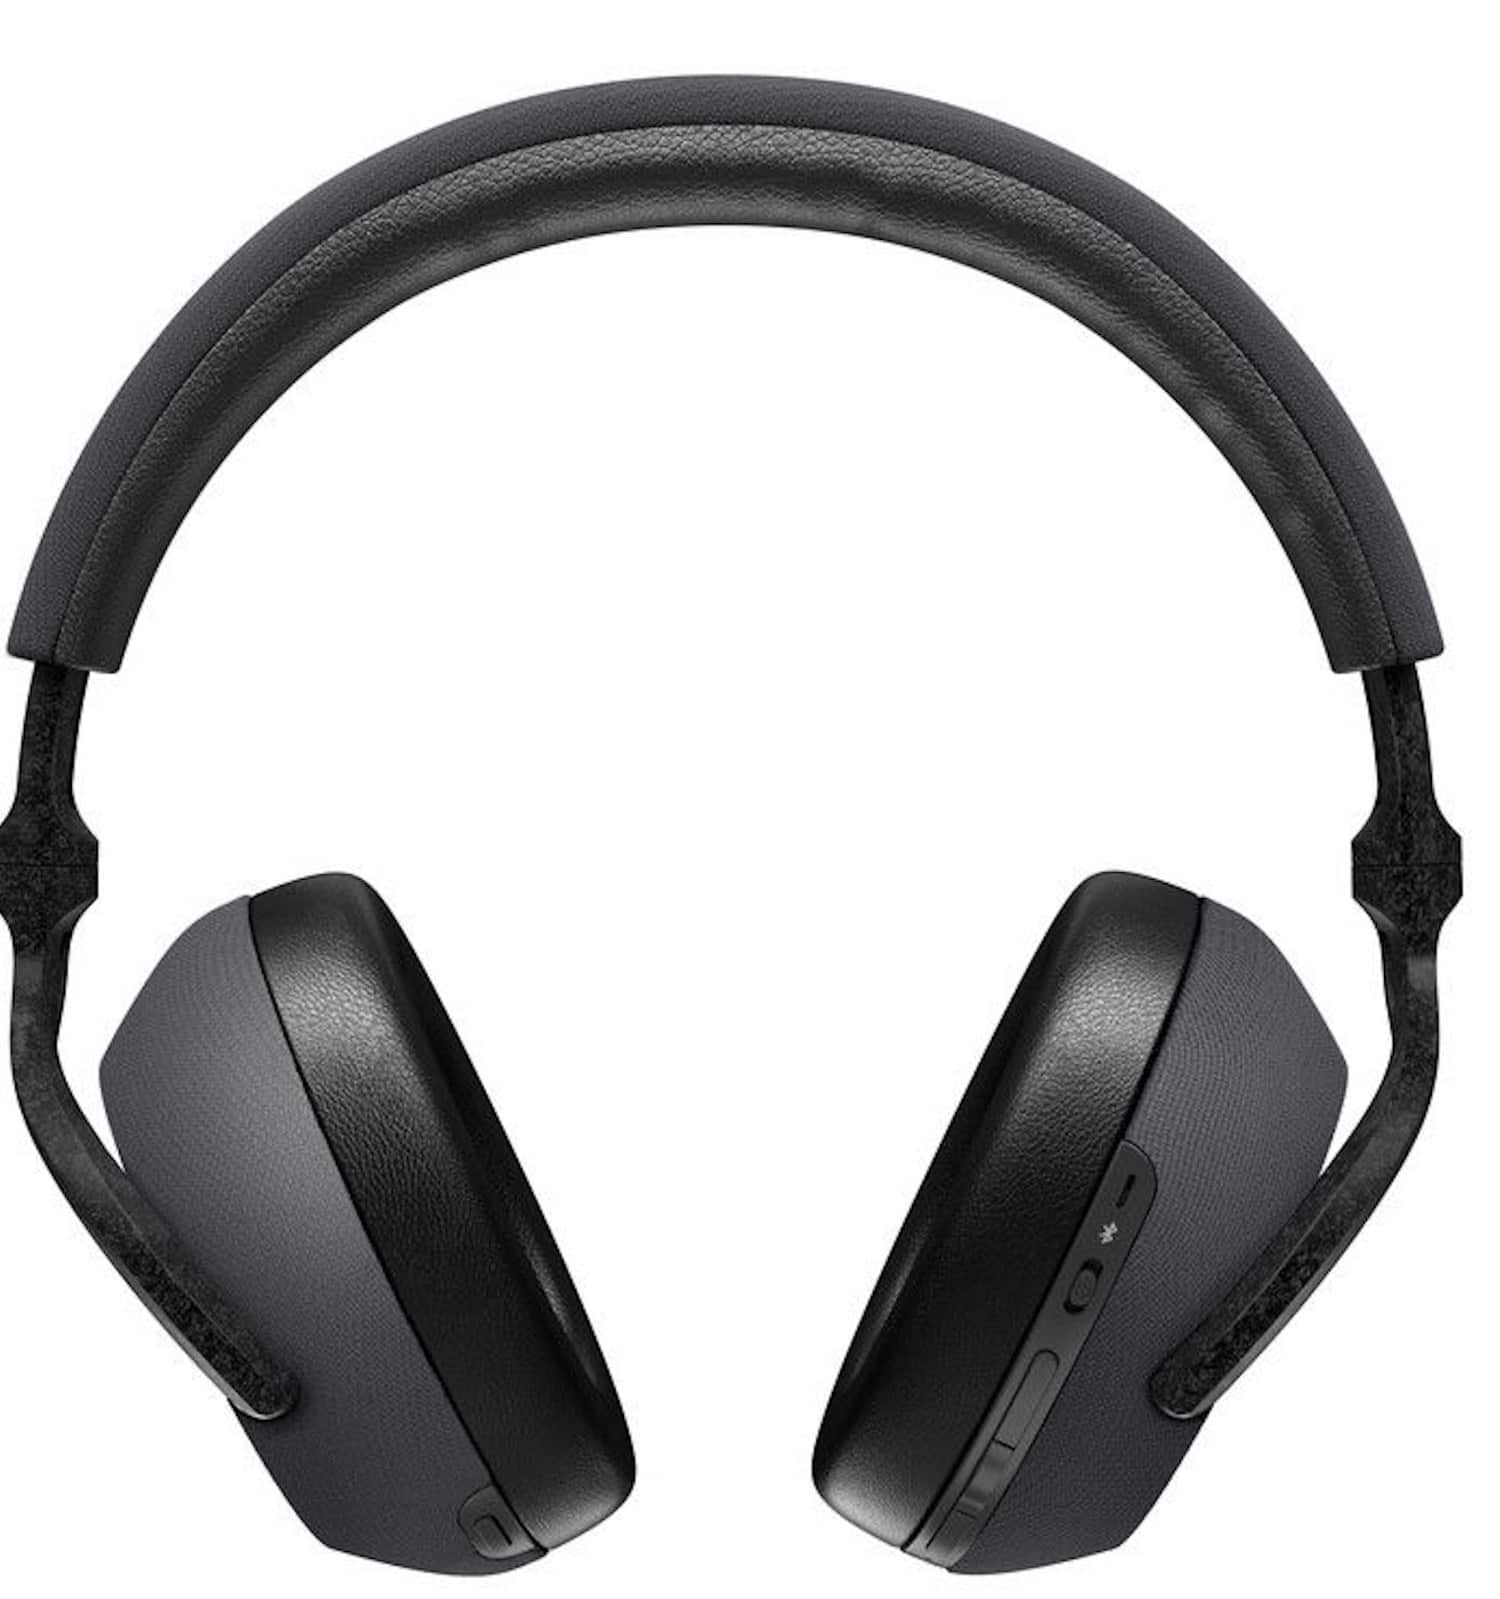 B&W announce PX7 headphones